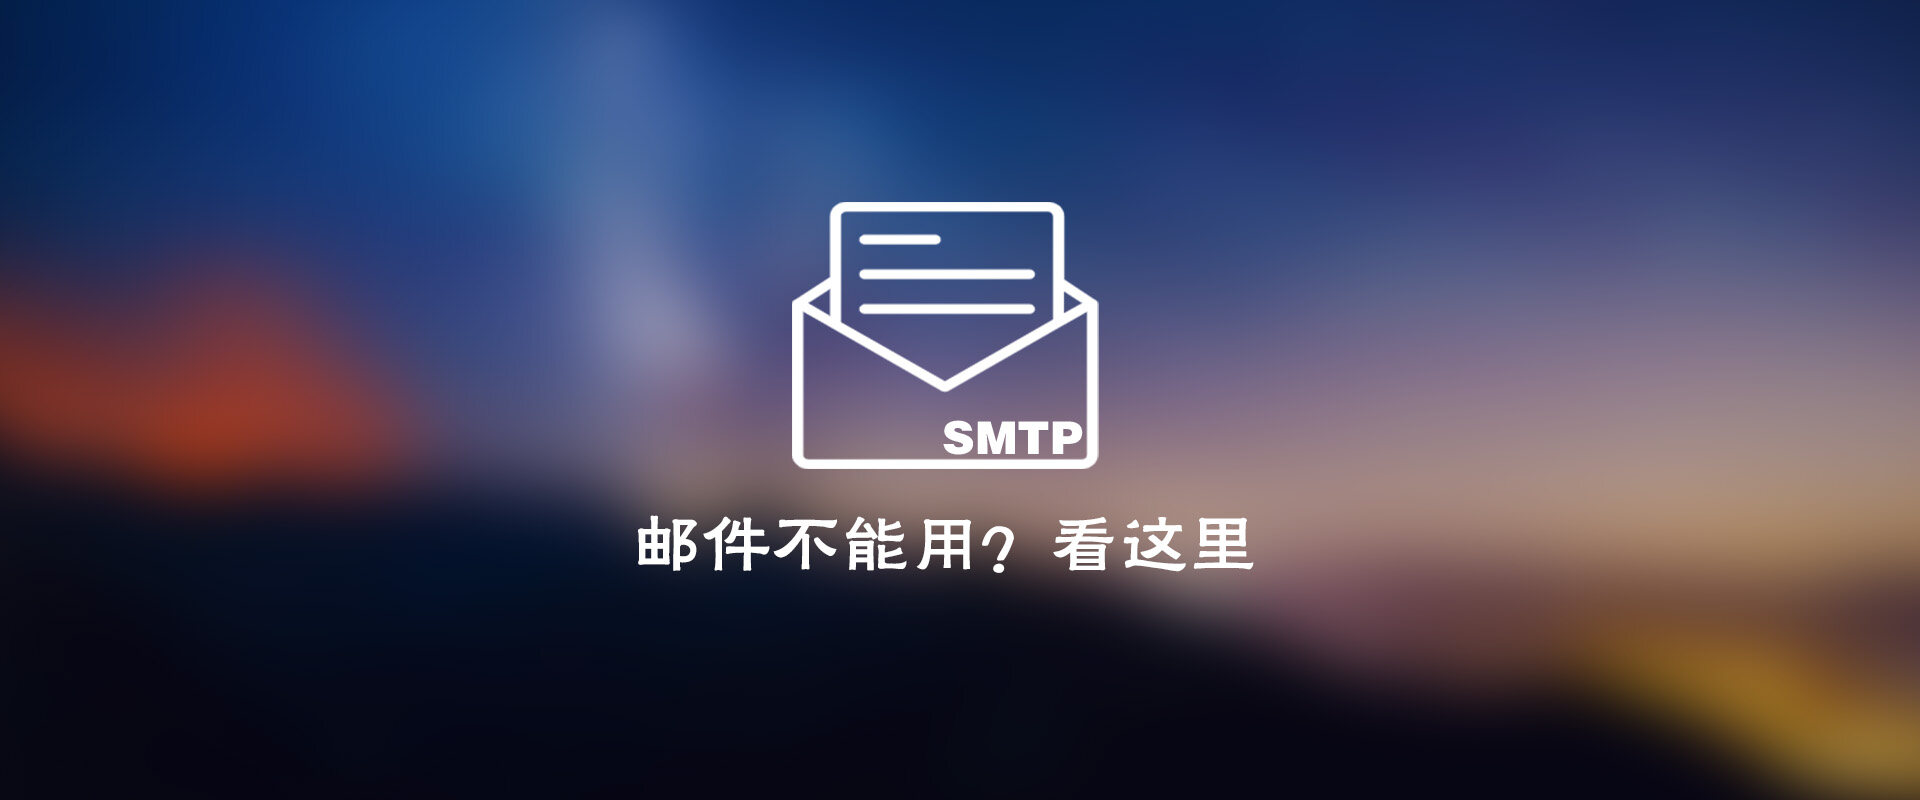 wordpress使用SMTP发邮件教程-解决邮件发送问题-Wordpress主题模板-zibll子比主题